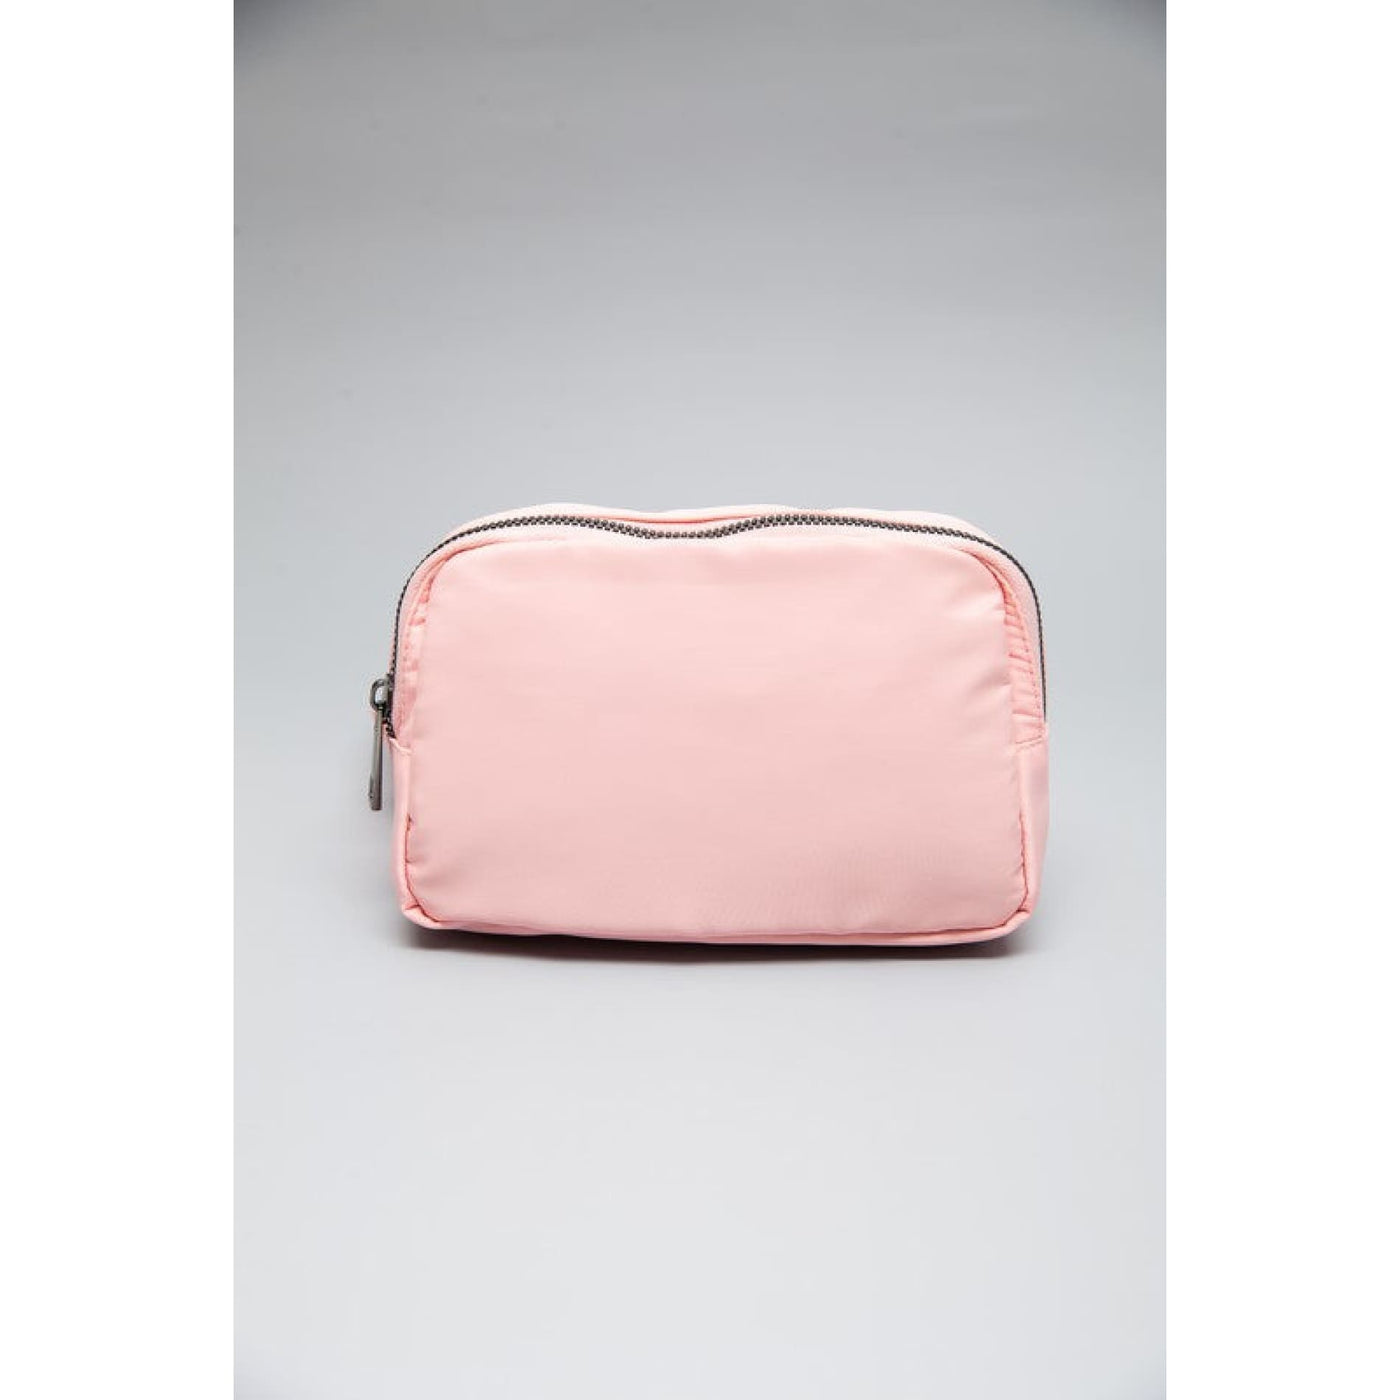 Bum Bag - Pink - 200 Handbags